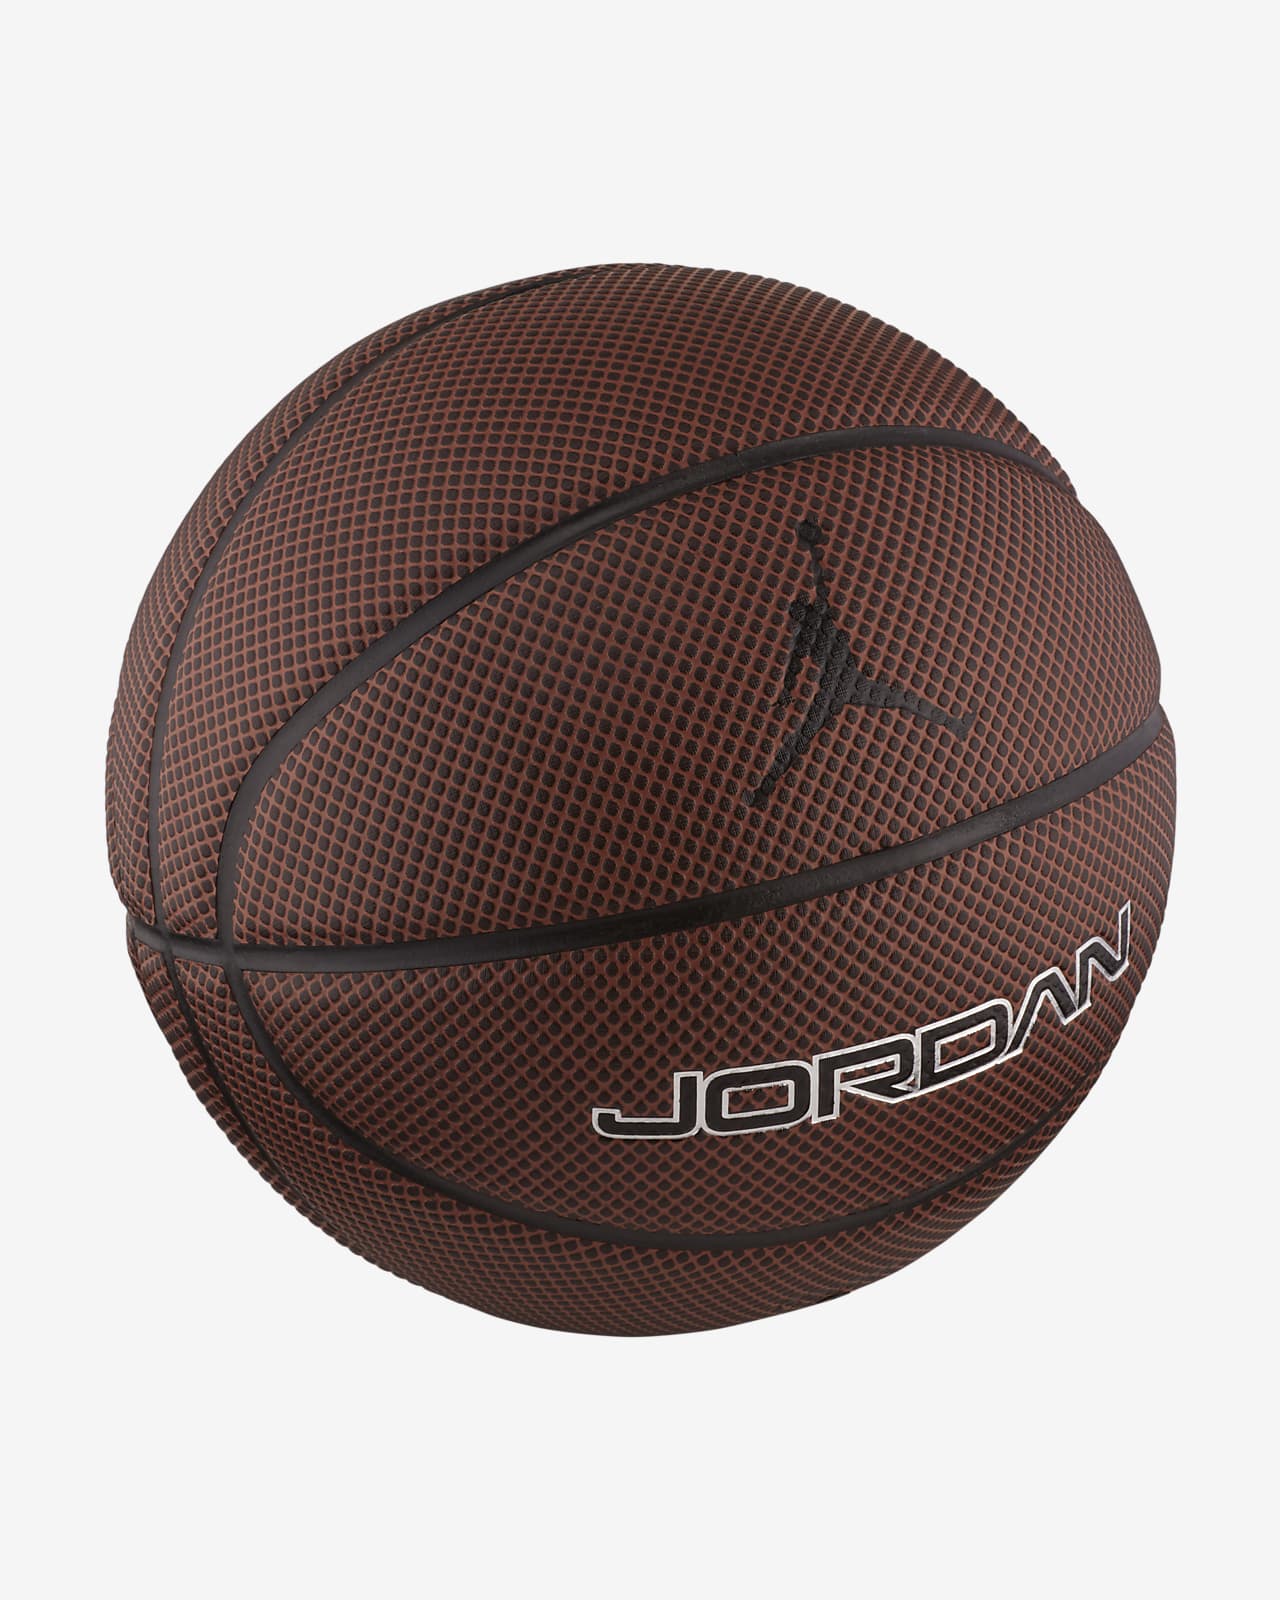 Jordan Legacy 8P (Size 7) Basketball. Nike SE